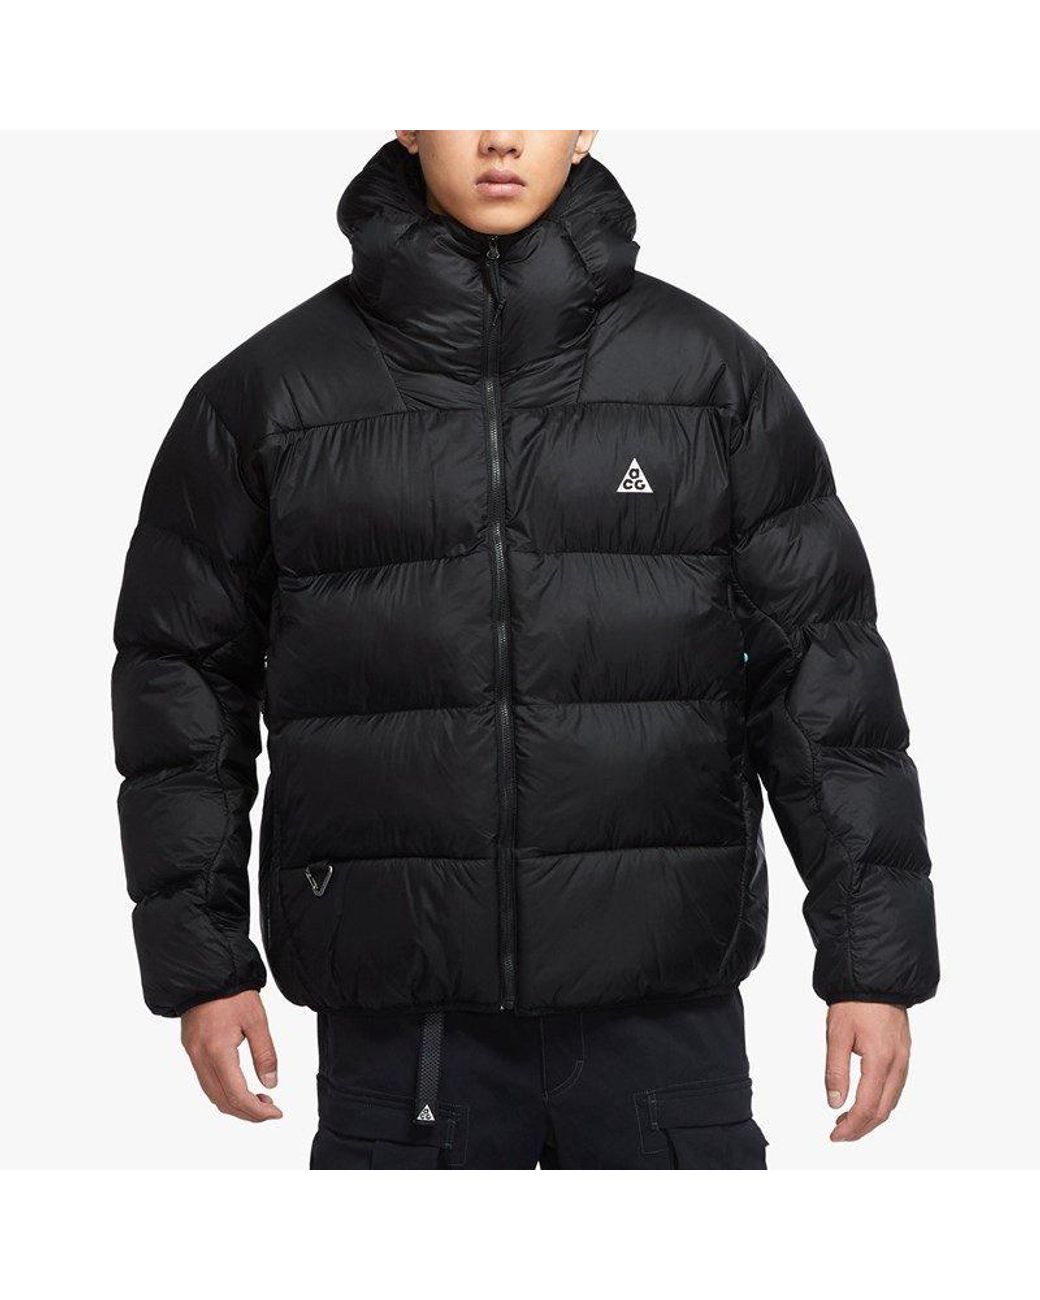 Nike Acg Lunar Lake Puffer Jacket in Black | Lyst UK